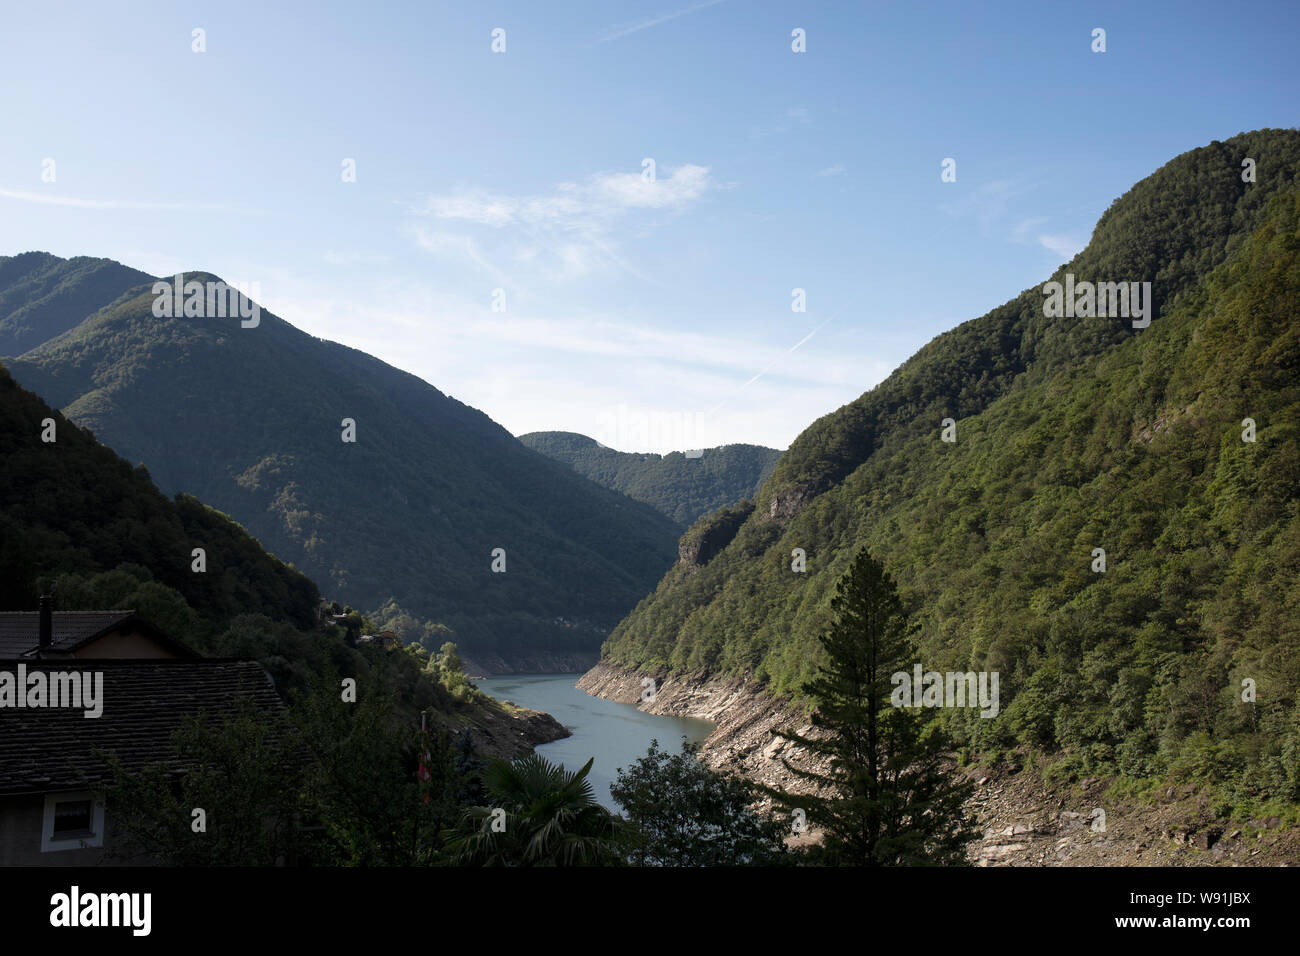 The Verzasca River flows through the Verzasca Valley in Lavertezzo, in the Italian region of Ticino, Switzerland. Stock Photo